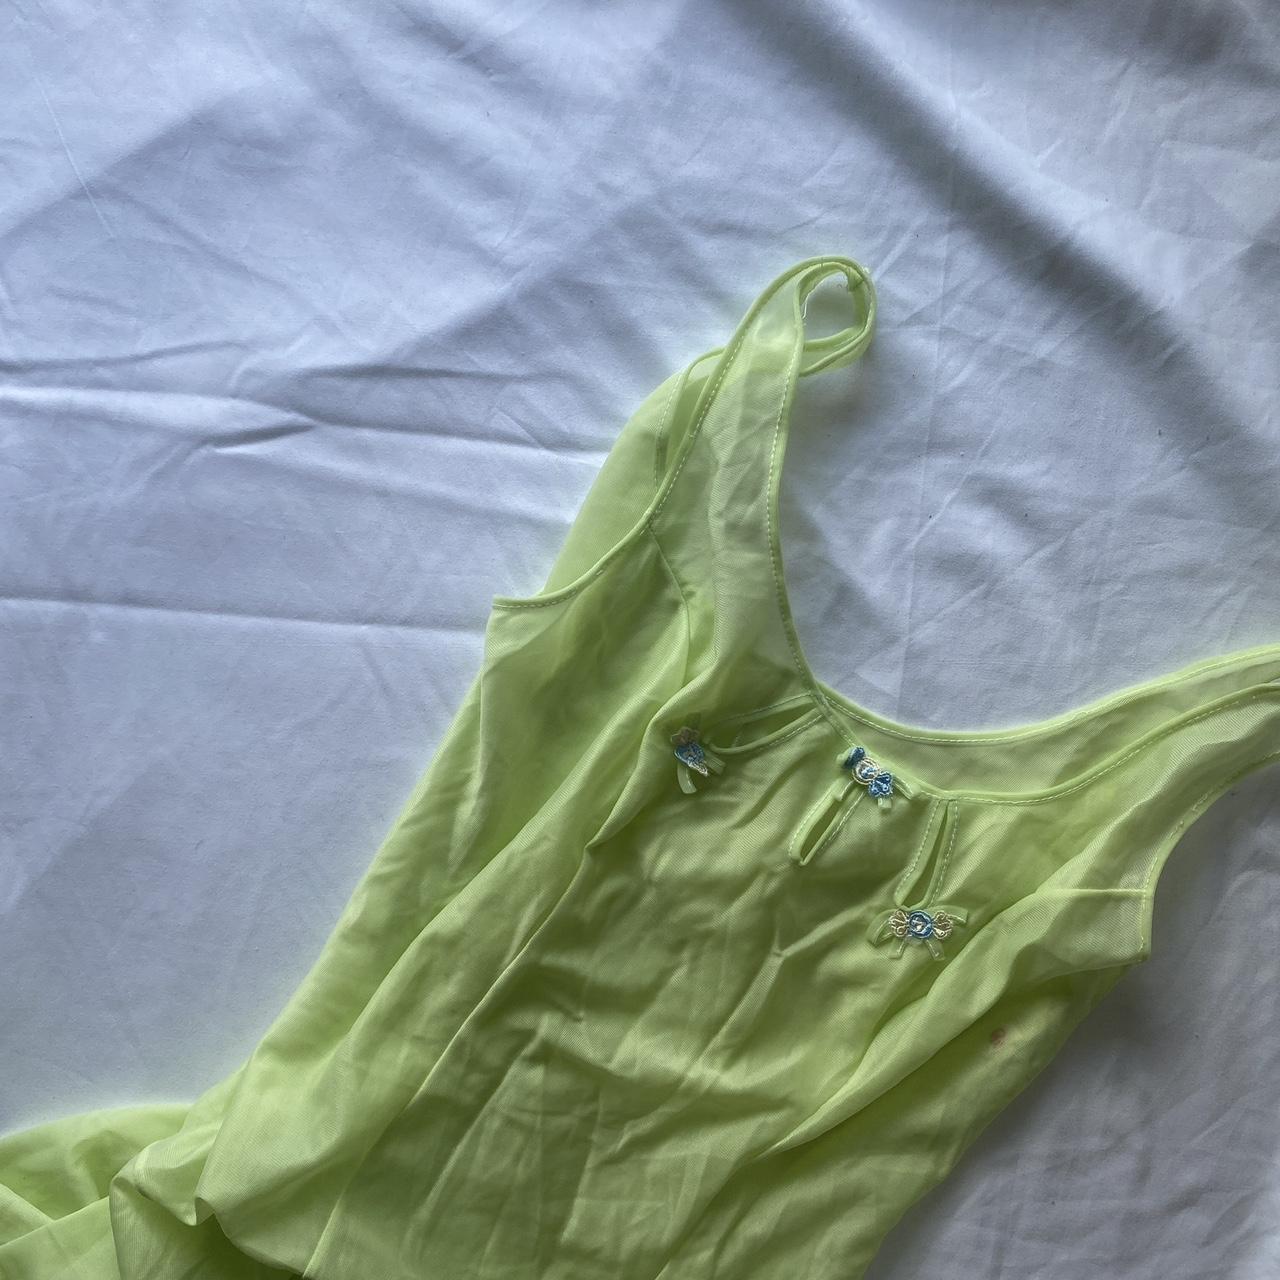 Dainty Green European Sheer Slip Dress Got this... - Depop